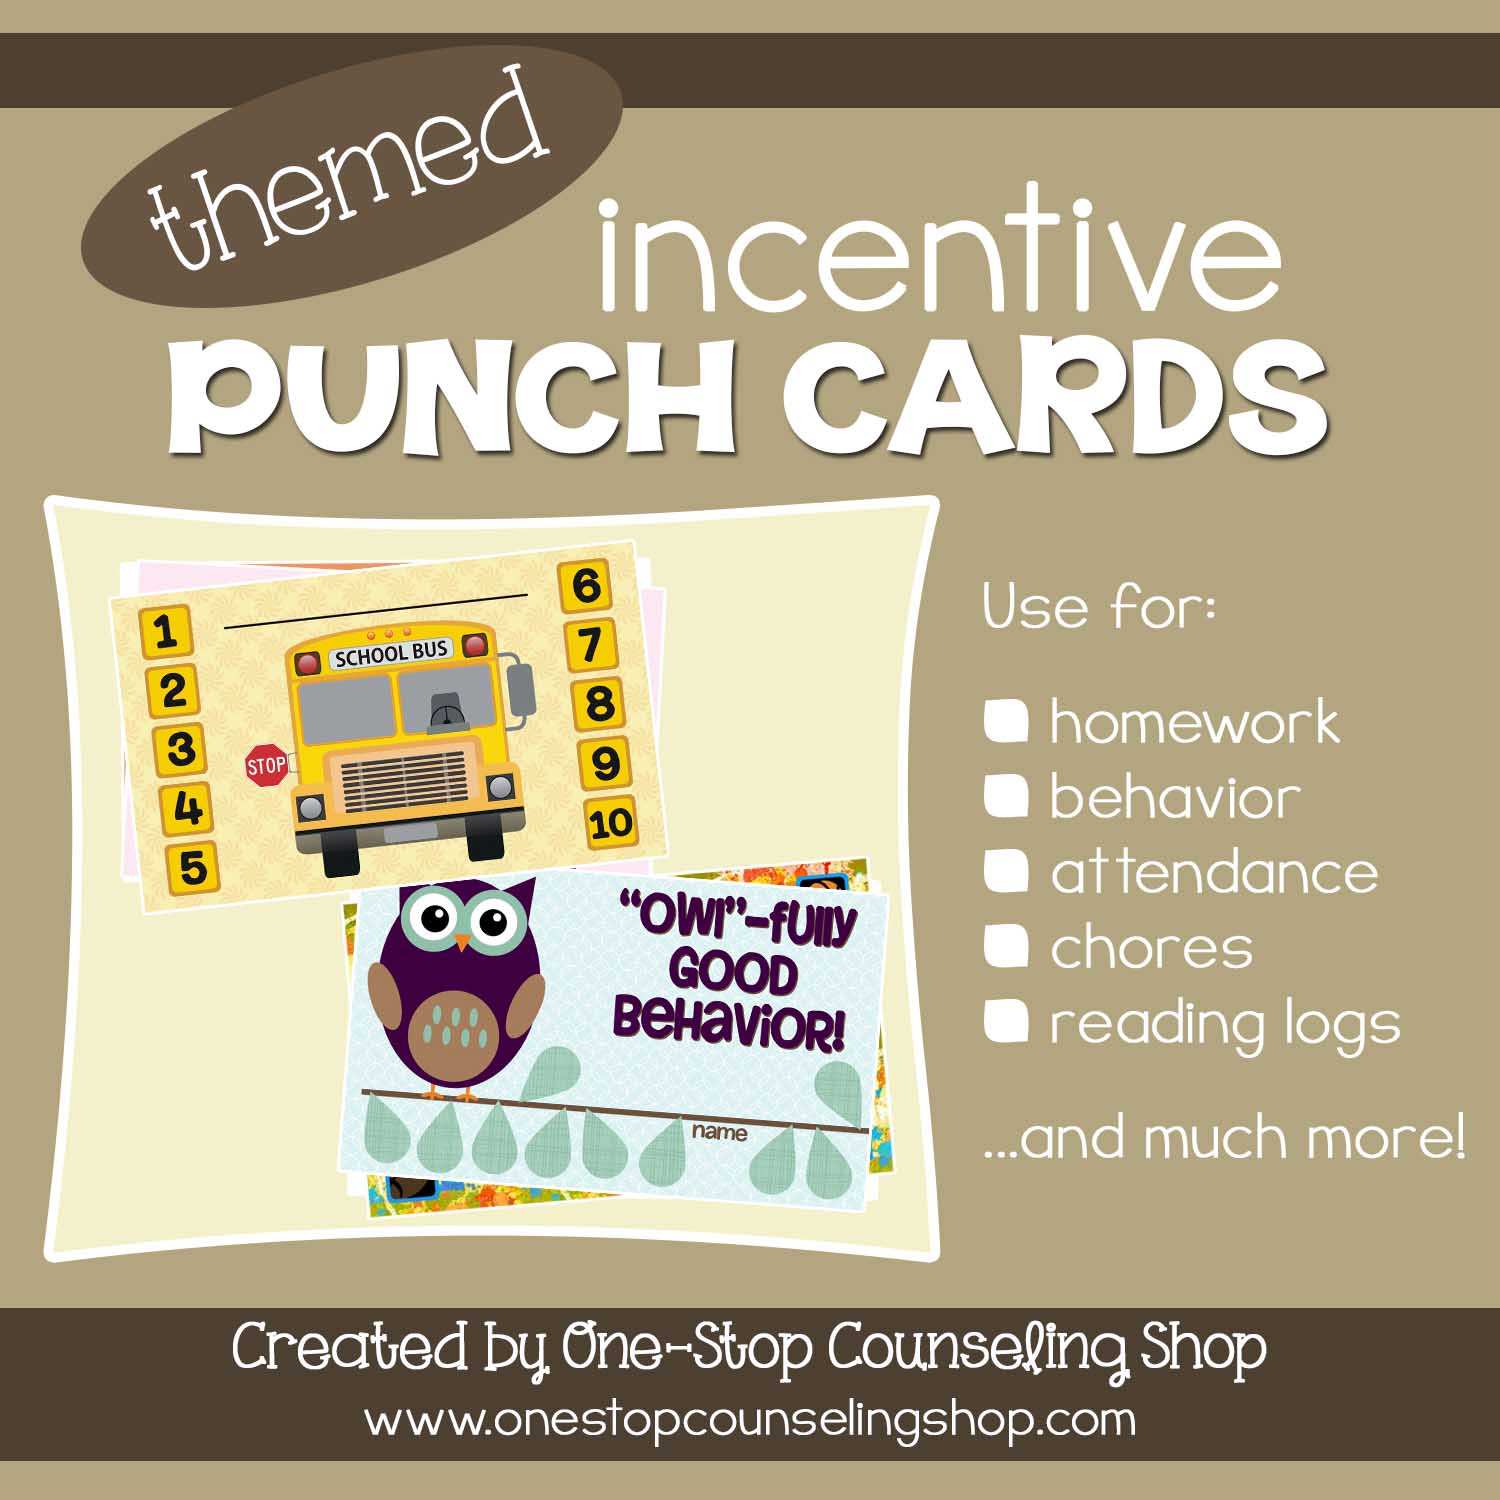 Good Behavior Punch Cards